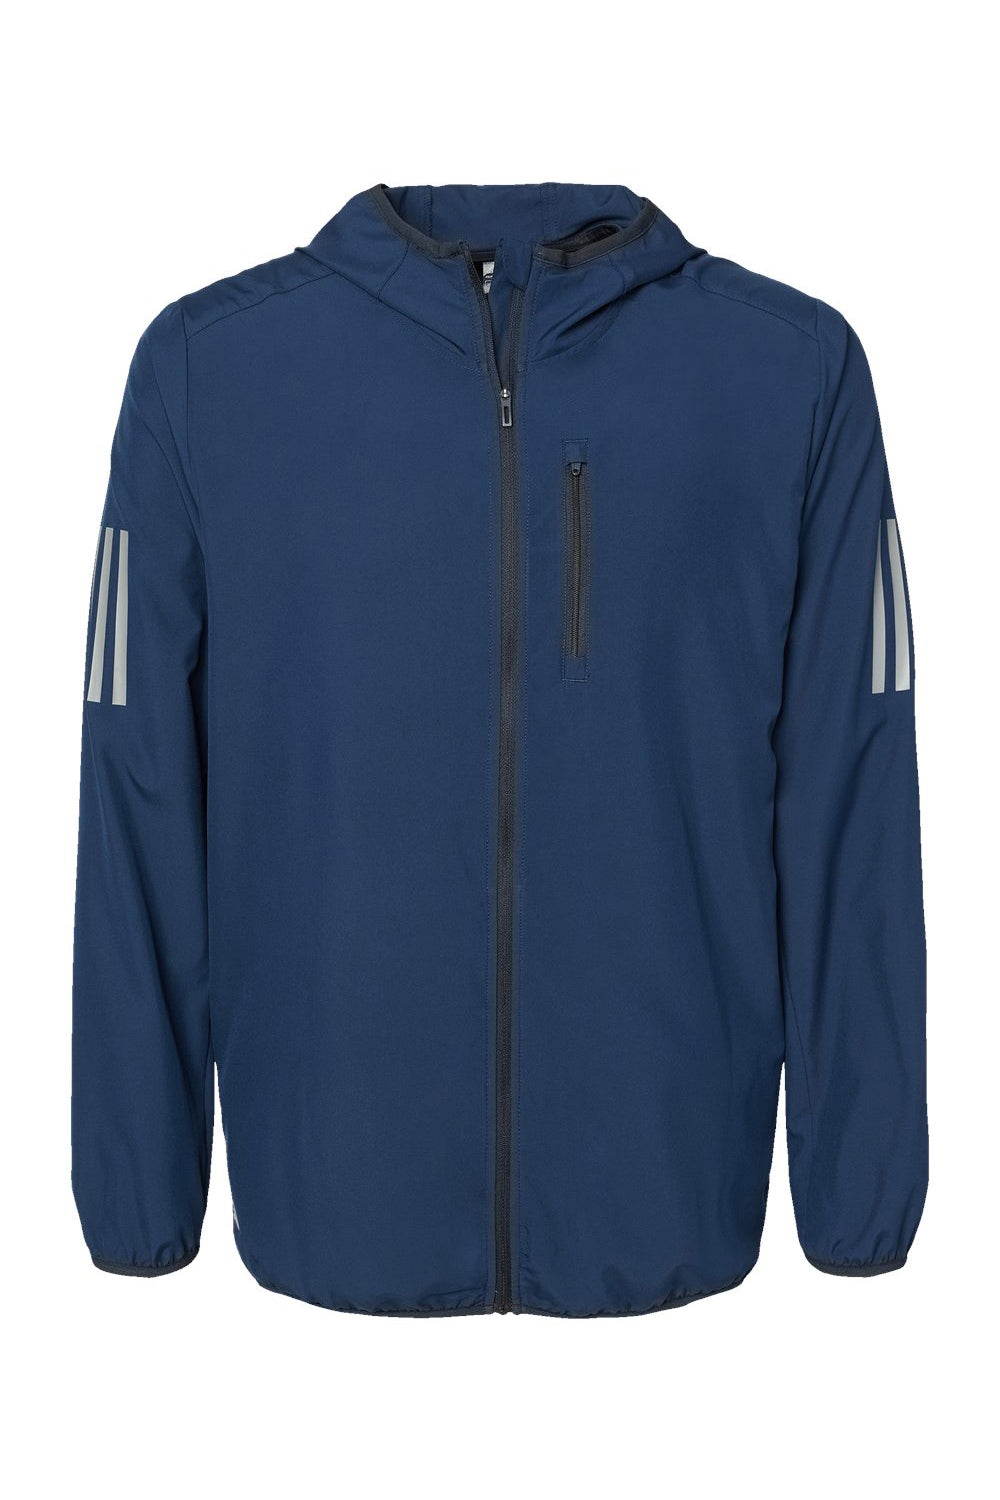 Adidas A524 Mens Full Zip Hooded Windbreaker Jacket Collegiate Navy Blue Flat Front